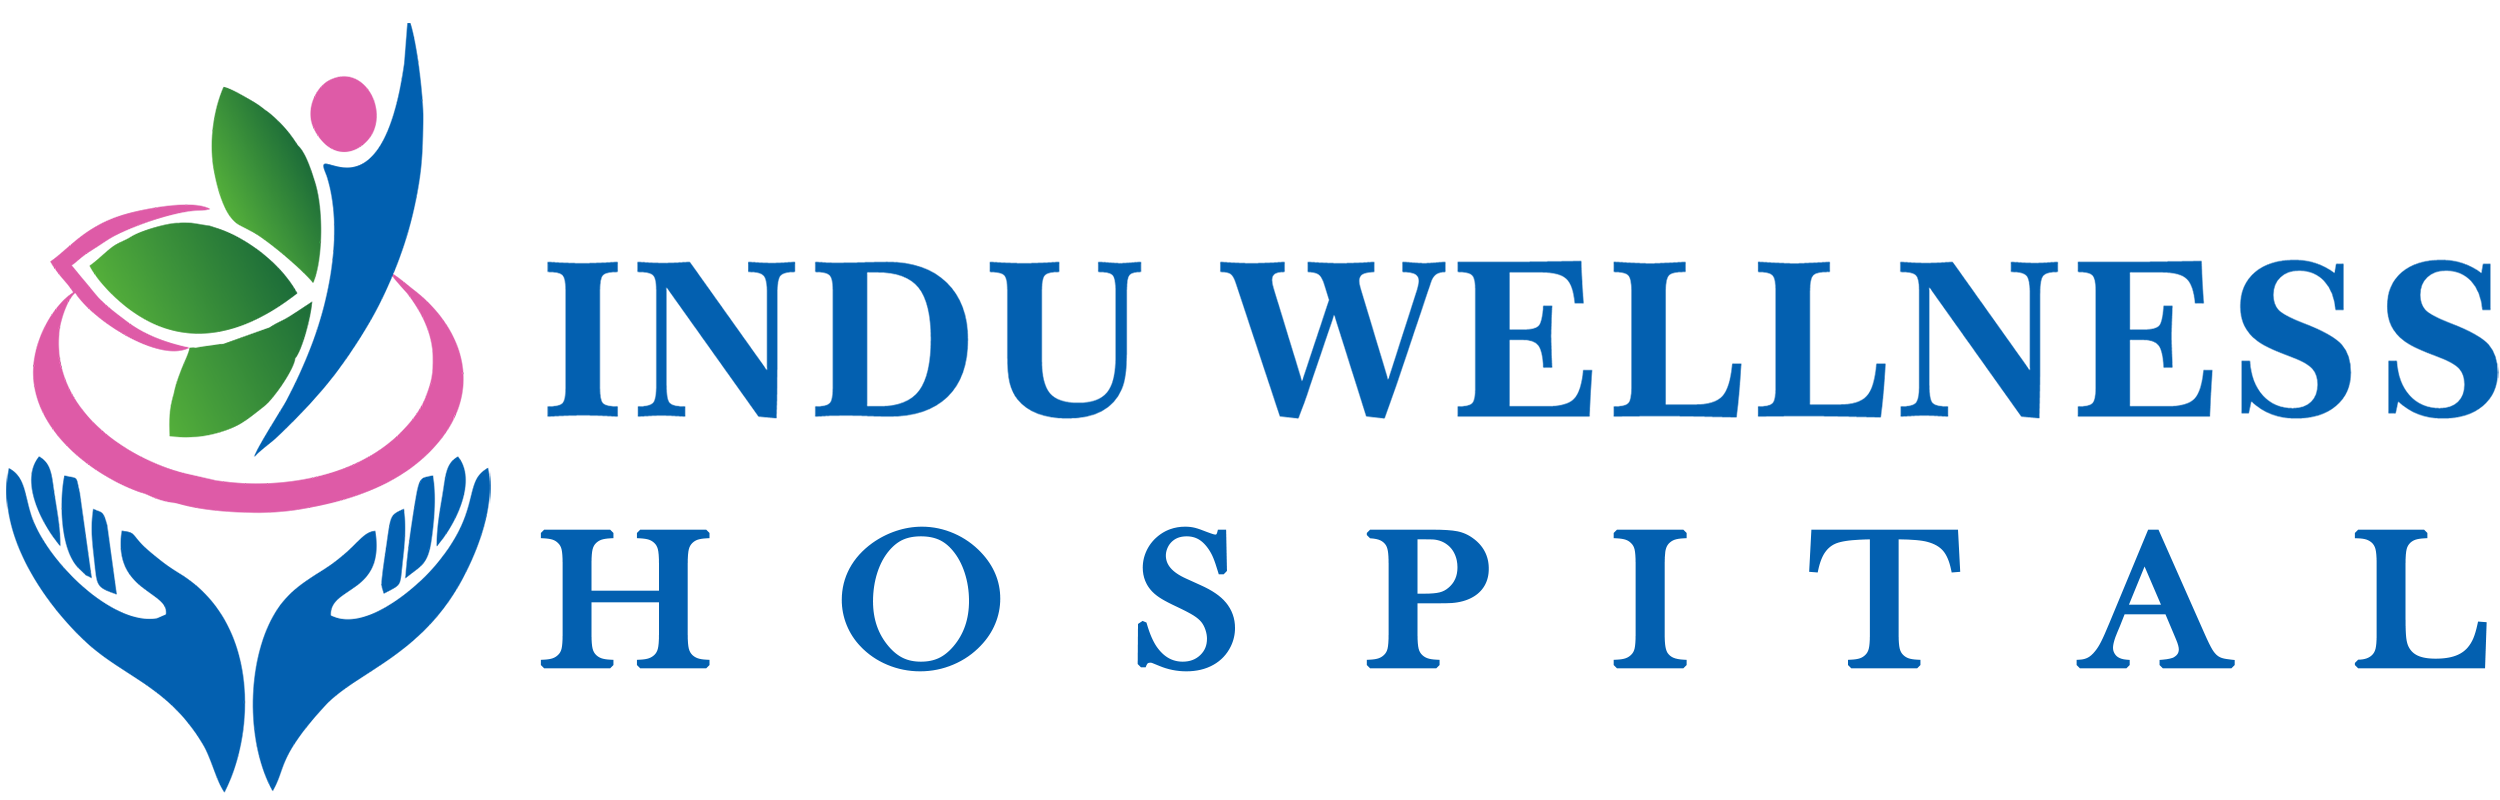 Piles Hospital in Wakad | Induwellness Clinic